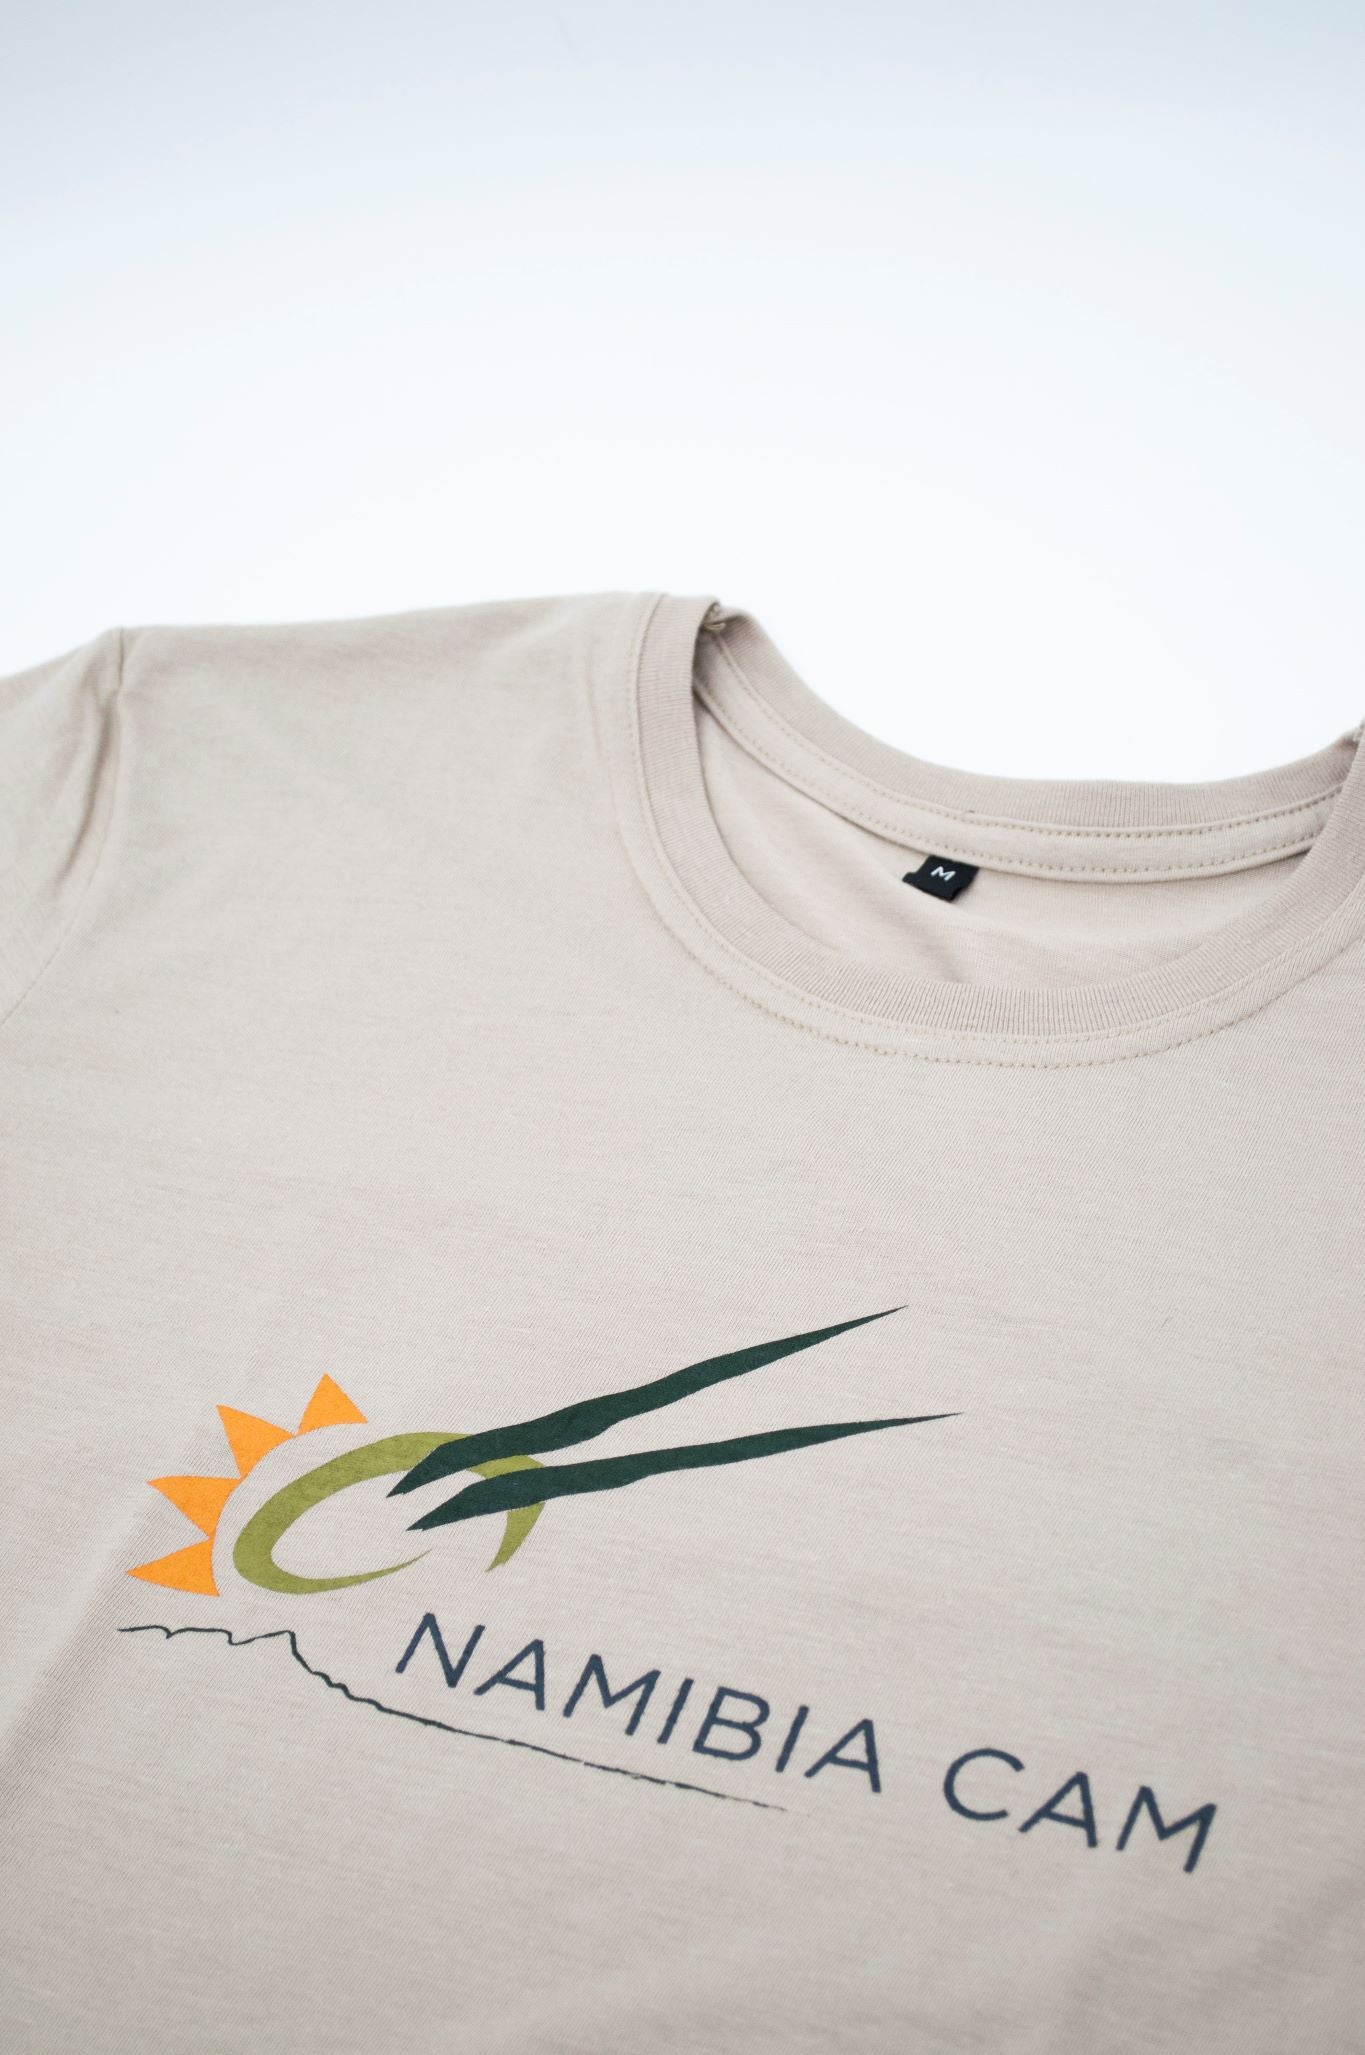 NamibiaCam Logo T-shirt